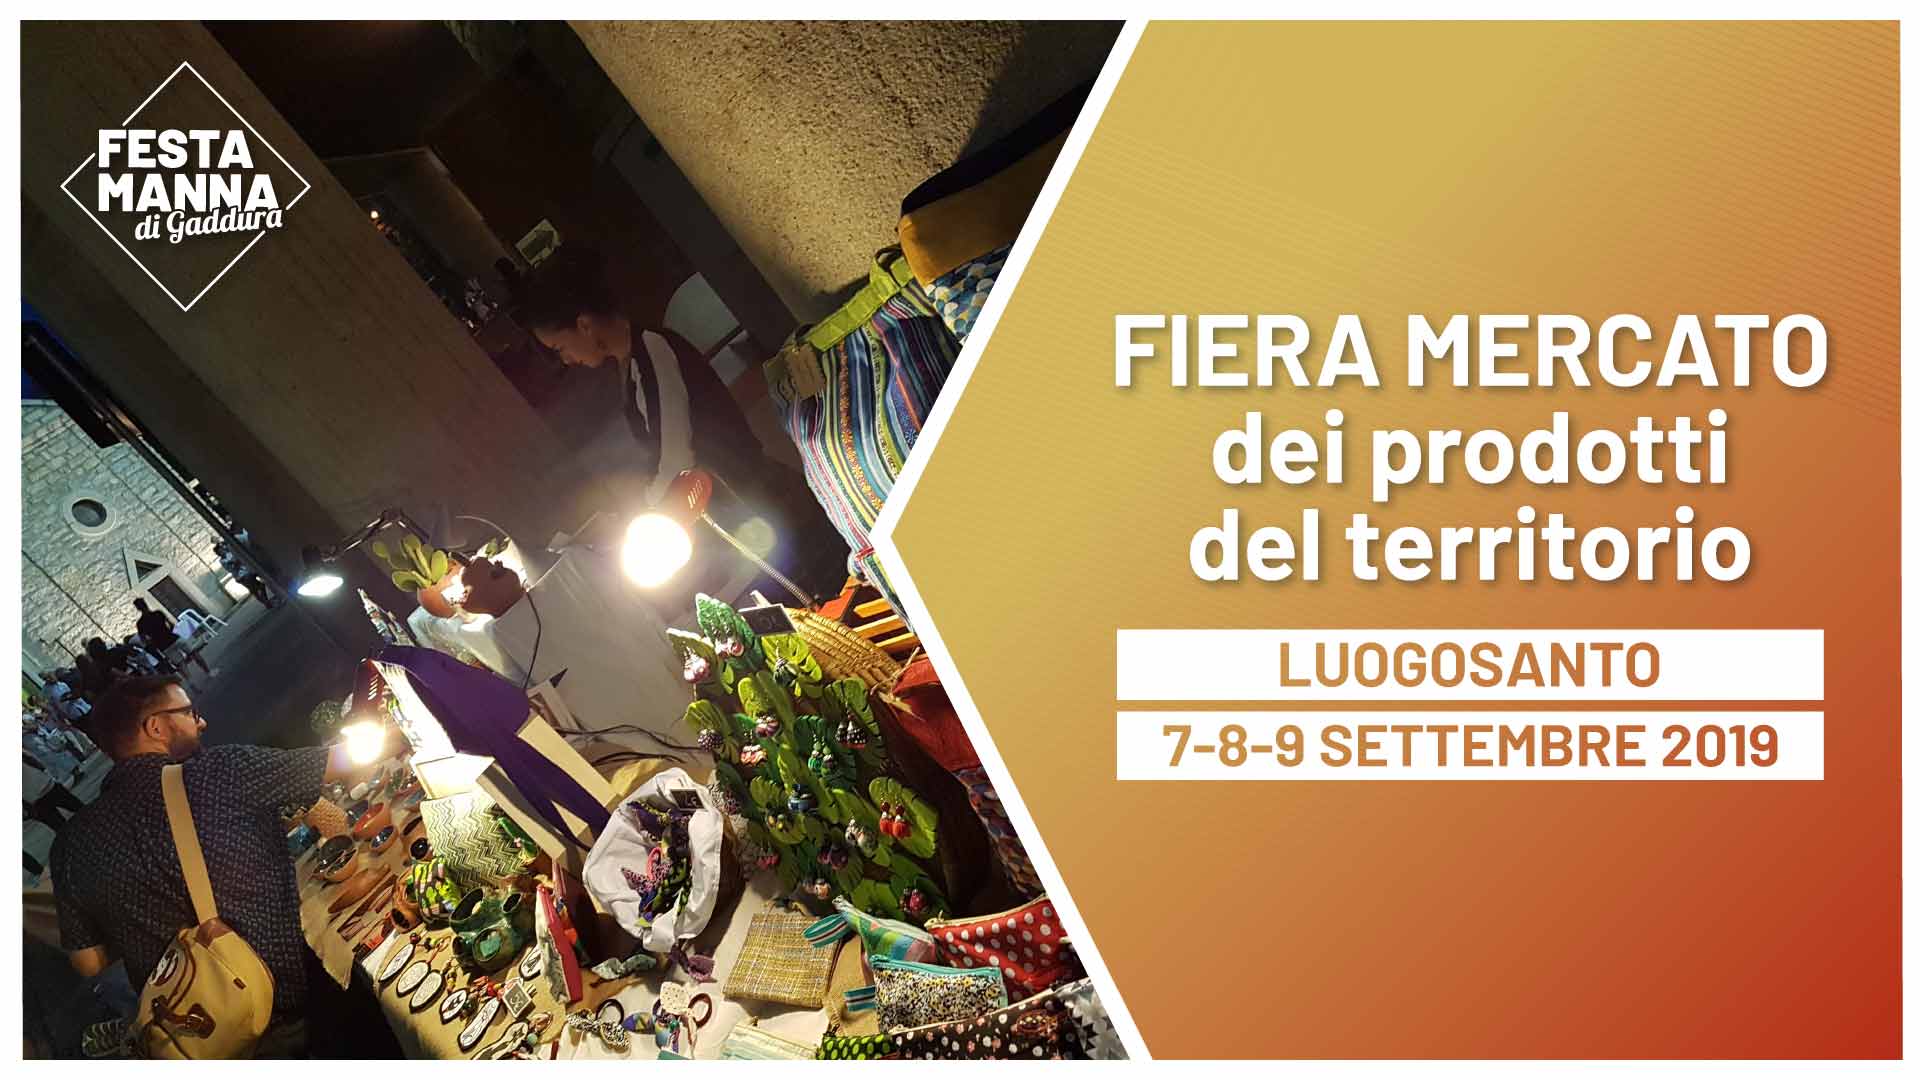 Fair market for agricultural and artisan products | Festa Manna di Gaddura 2019